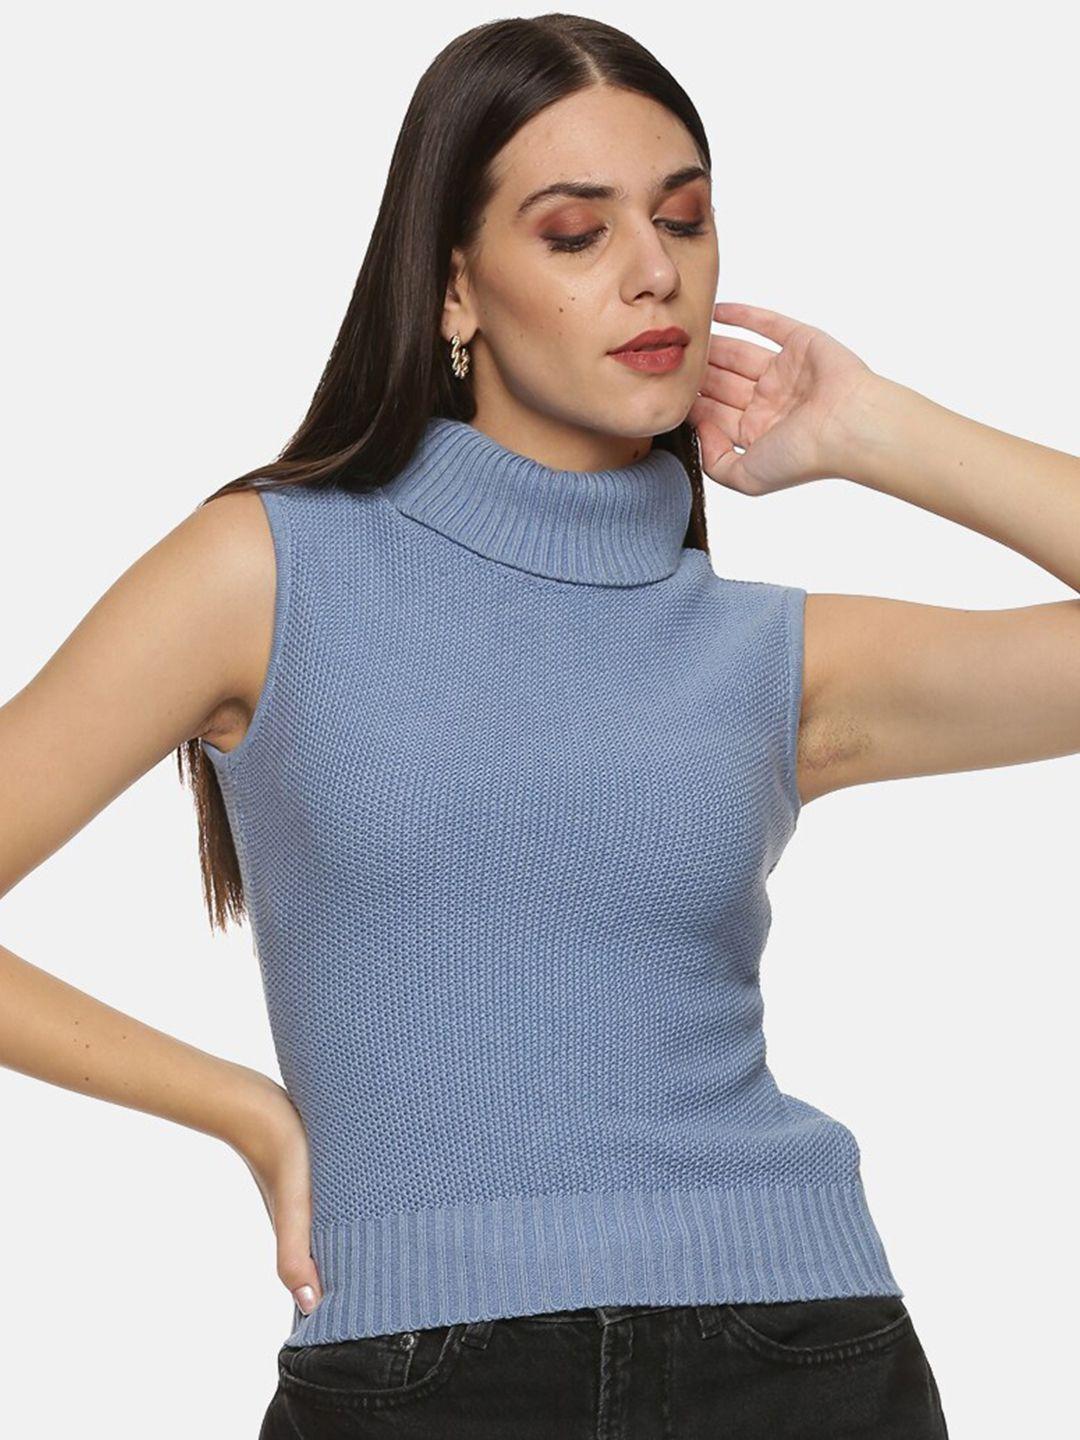 here&now women blue sweater vest